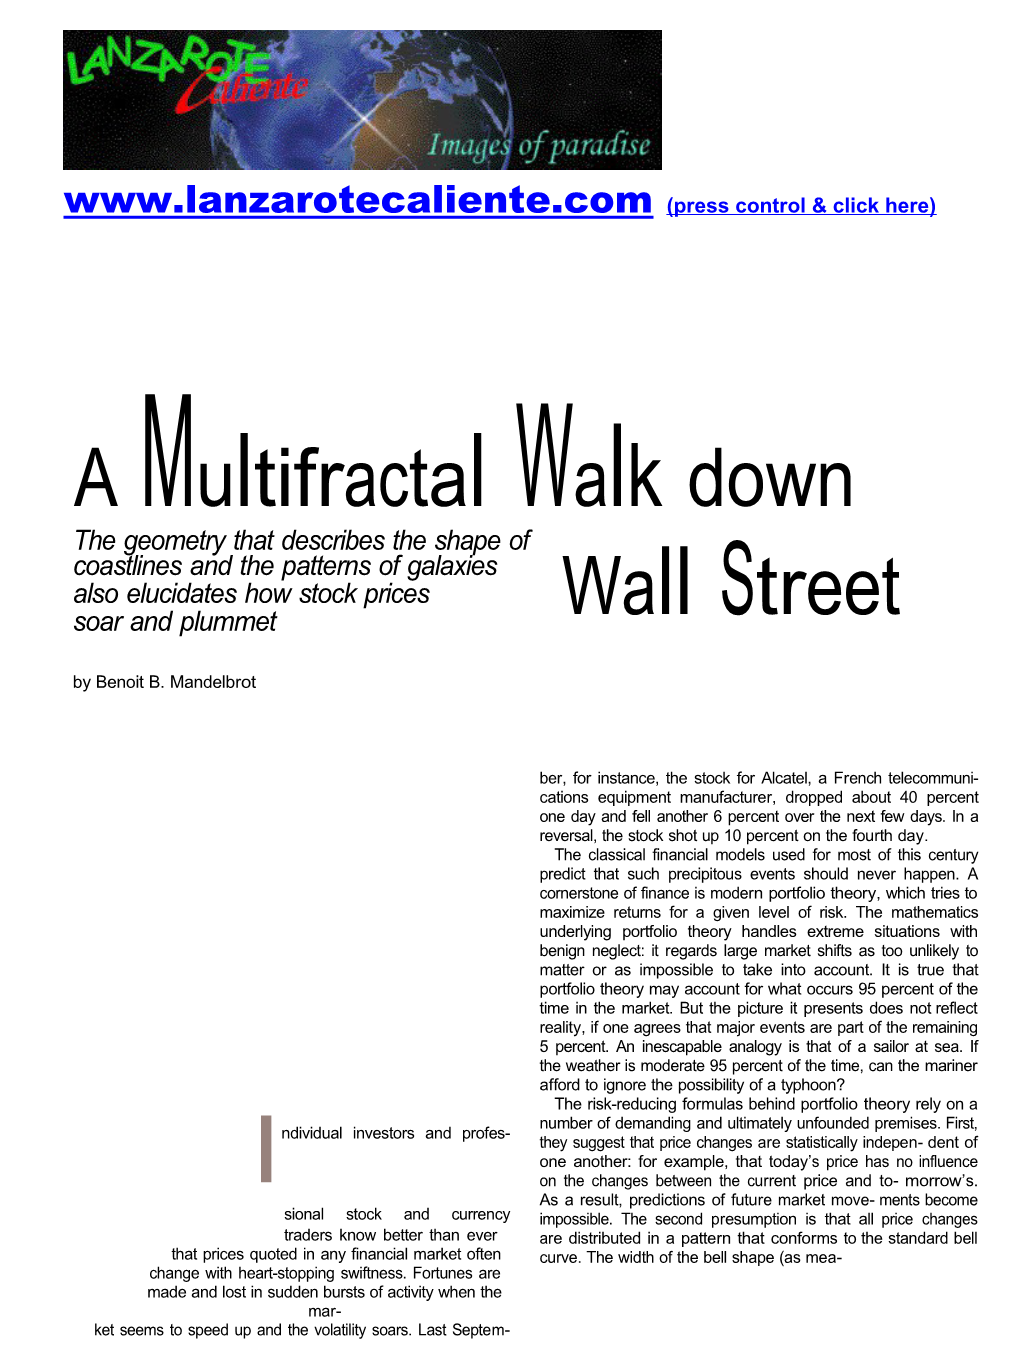 A Multifractal Walk Down